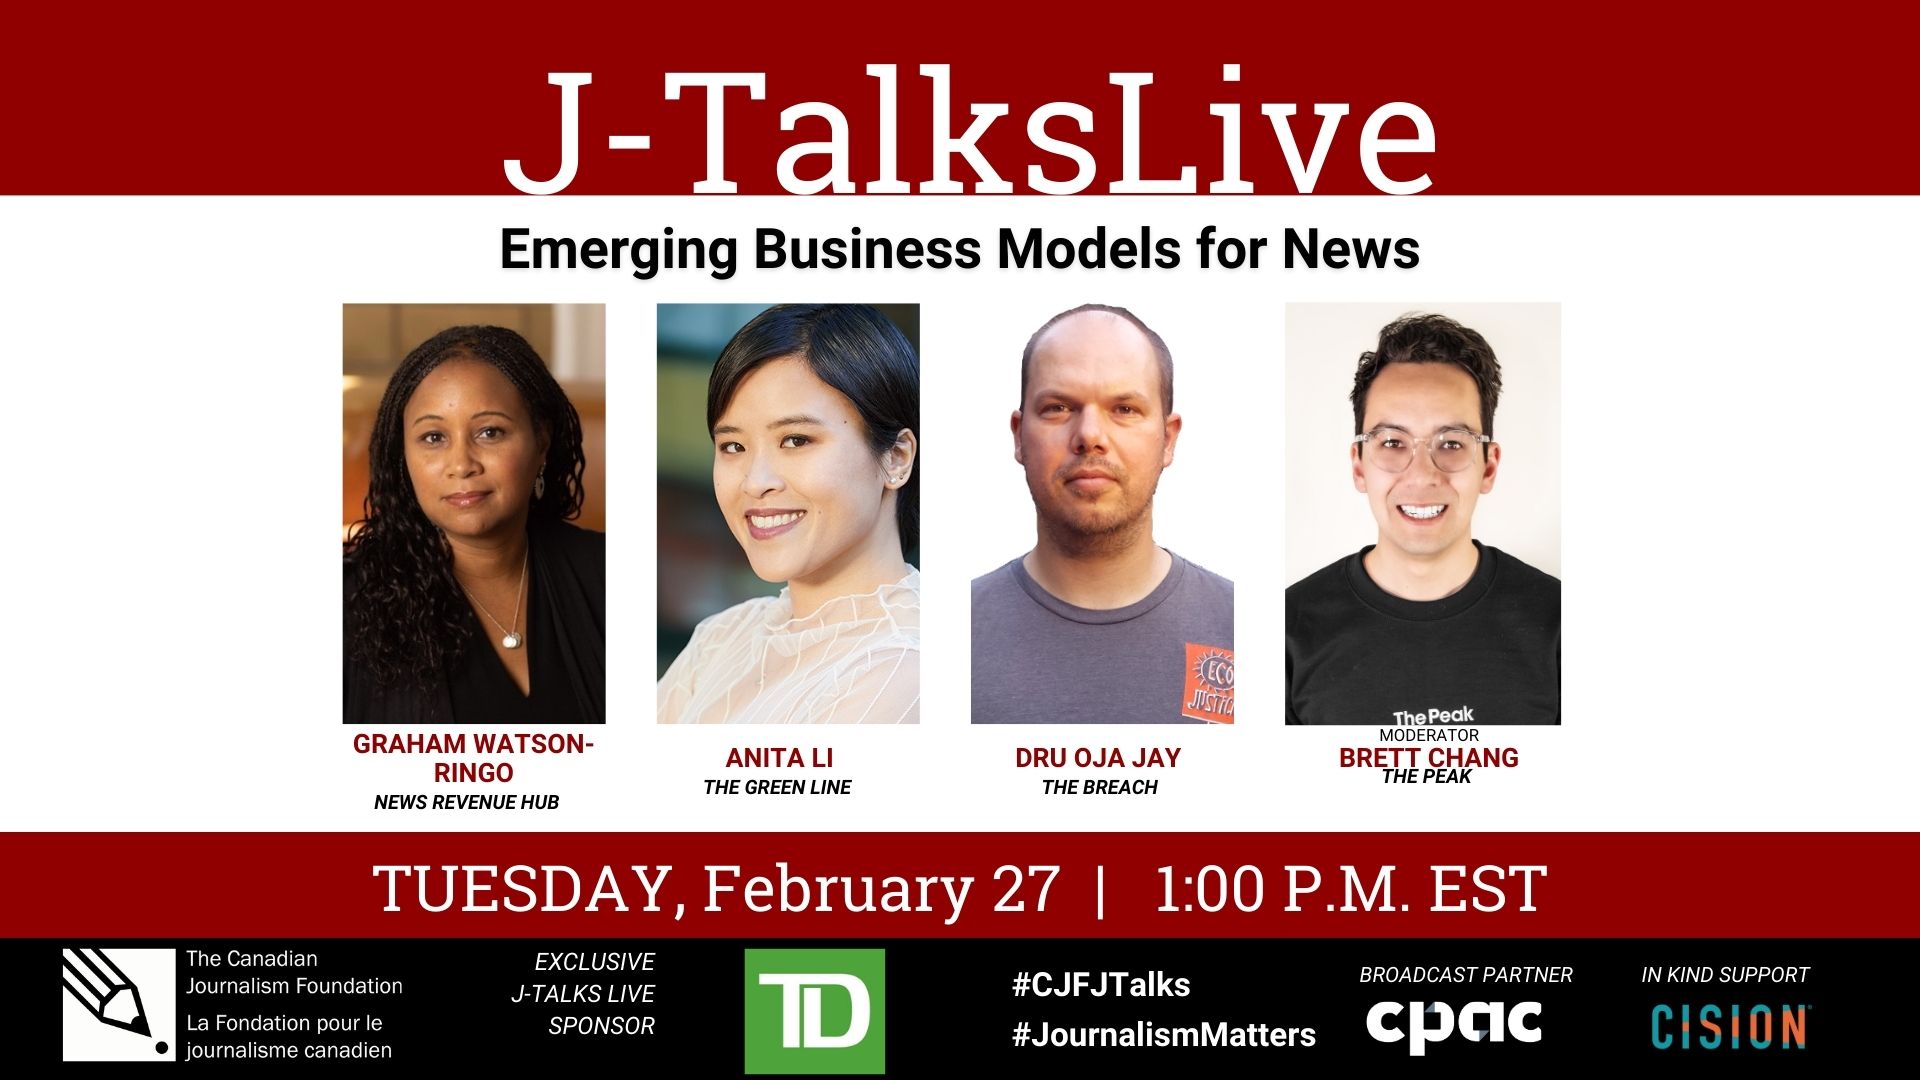 J-Talks Live: Emerging Business Models for News. Tuesday, February 27